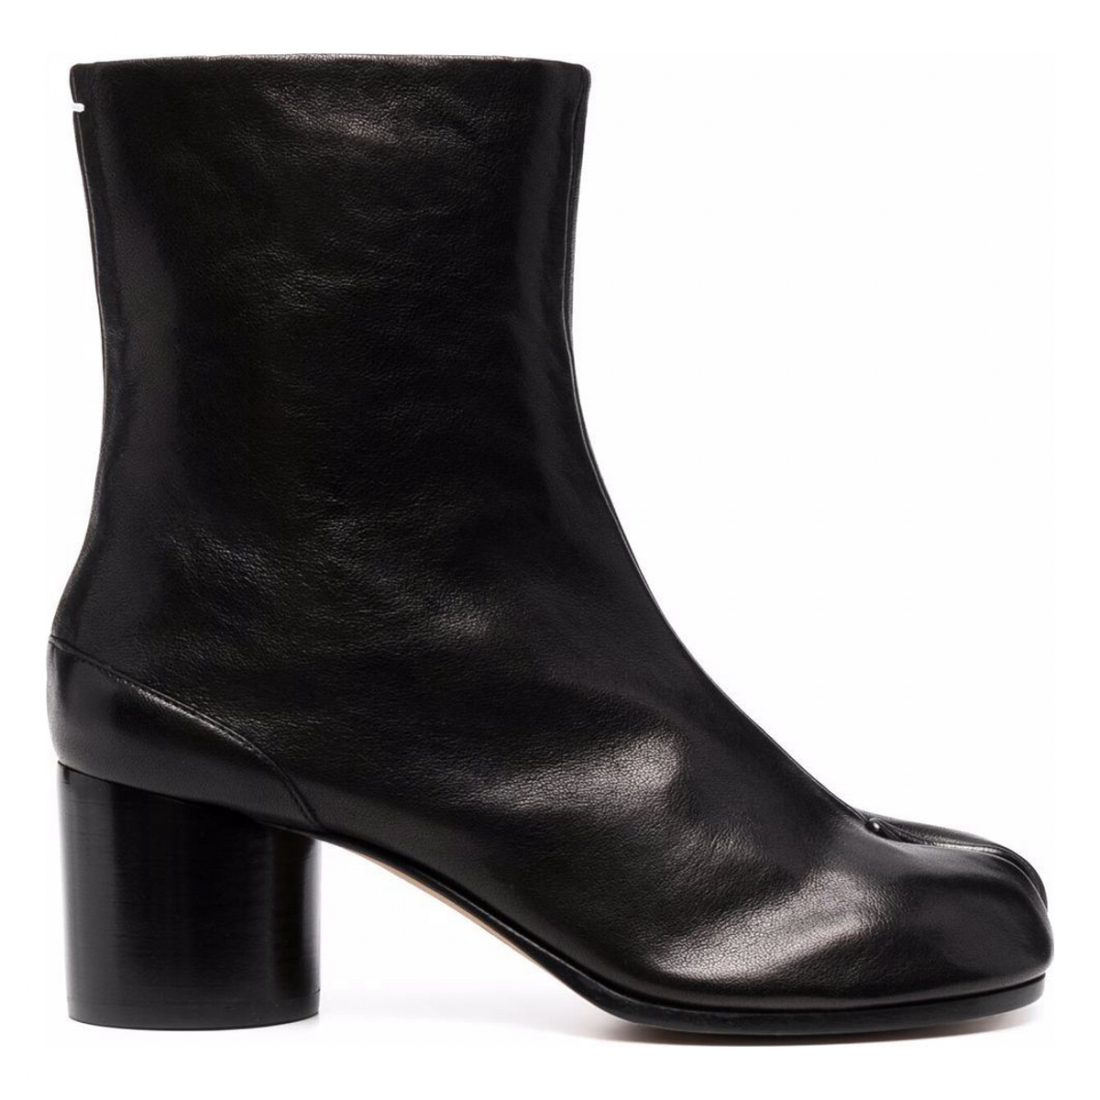 Women's 'Tabi' High Heeled Boots